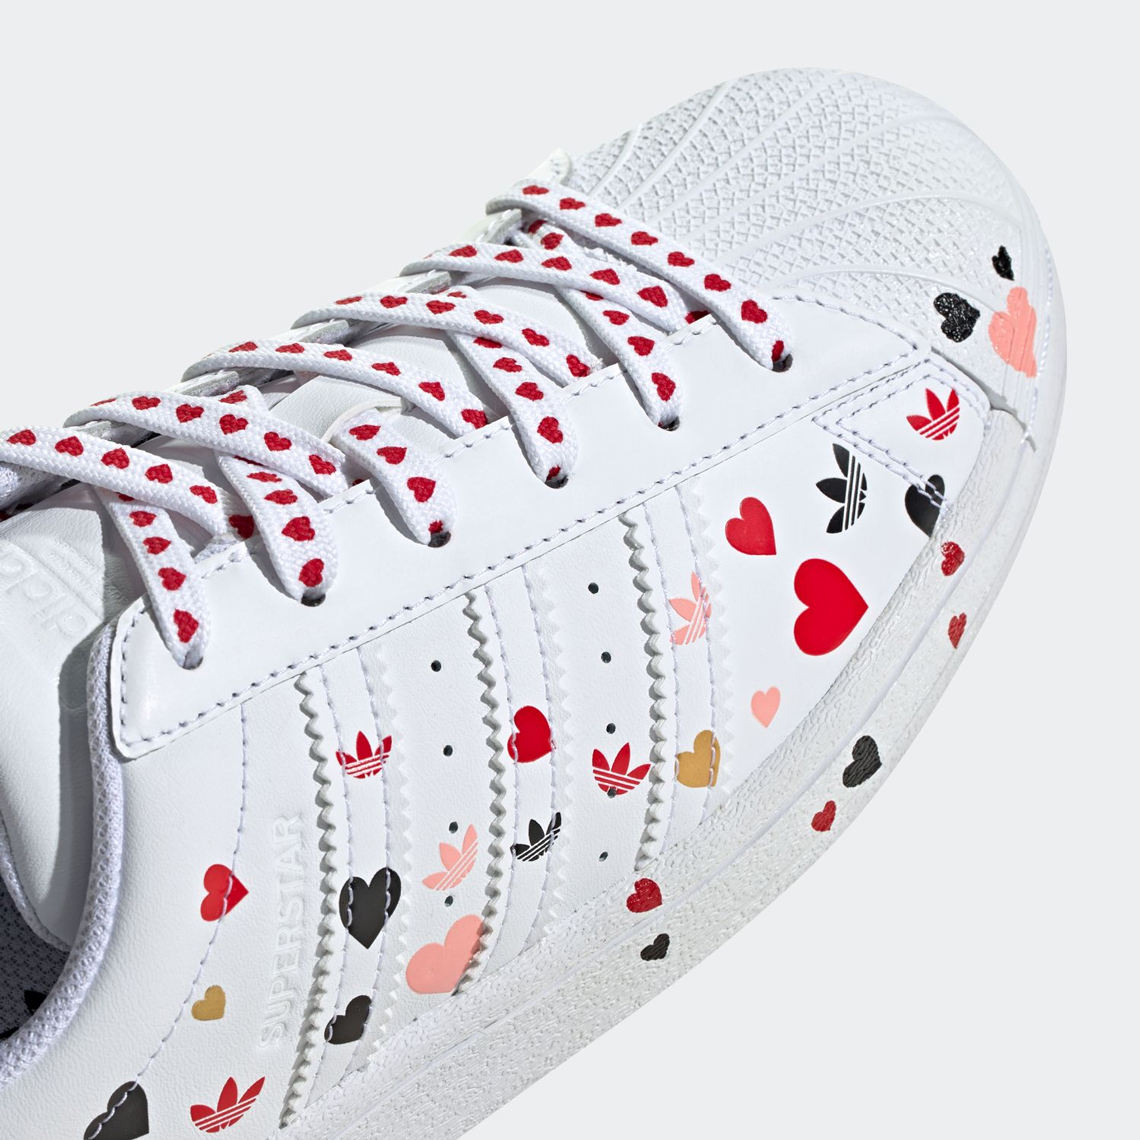 Typisch Omhoog gaan schoorsteen adidas Superstar Valentine's Day 2020 FV3289 | SneakerNews.com